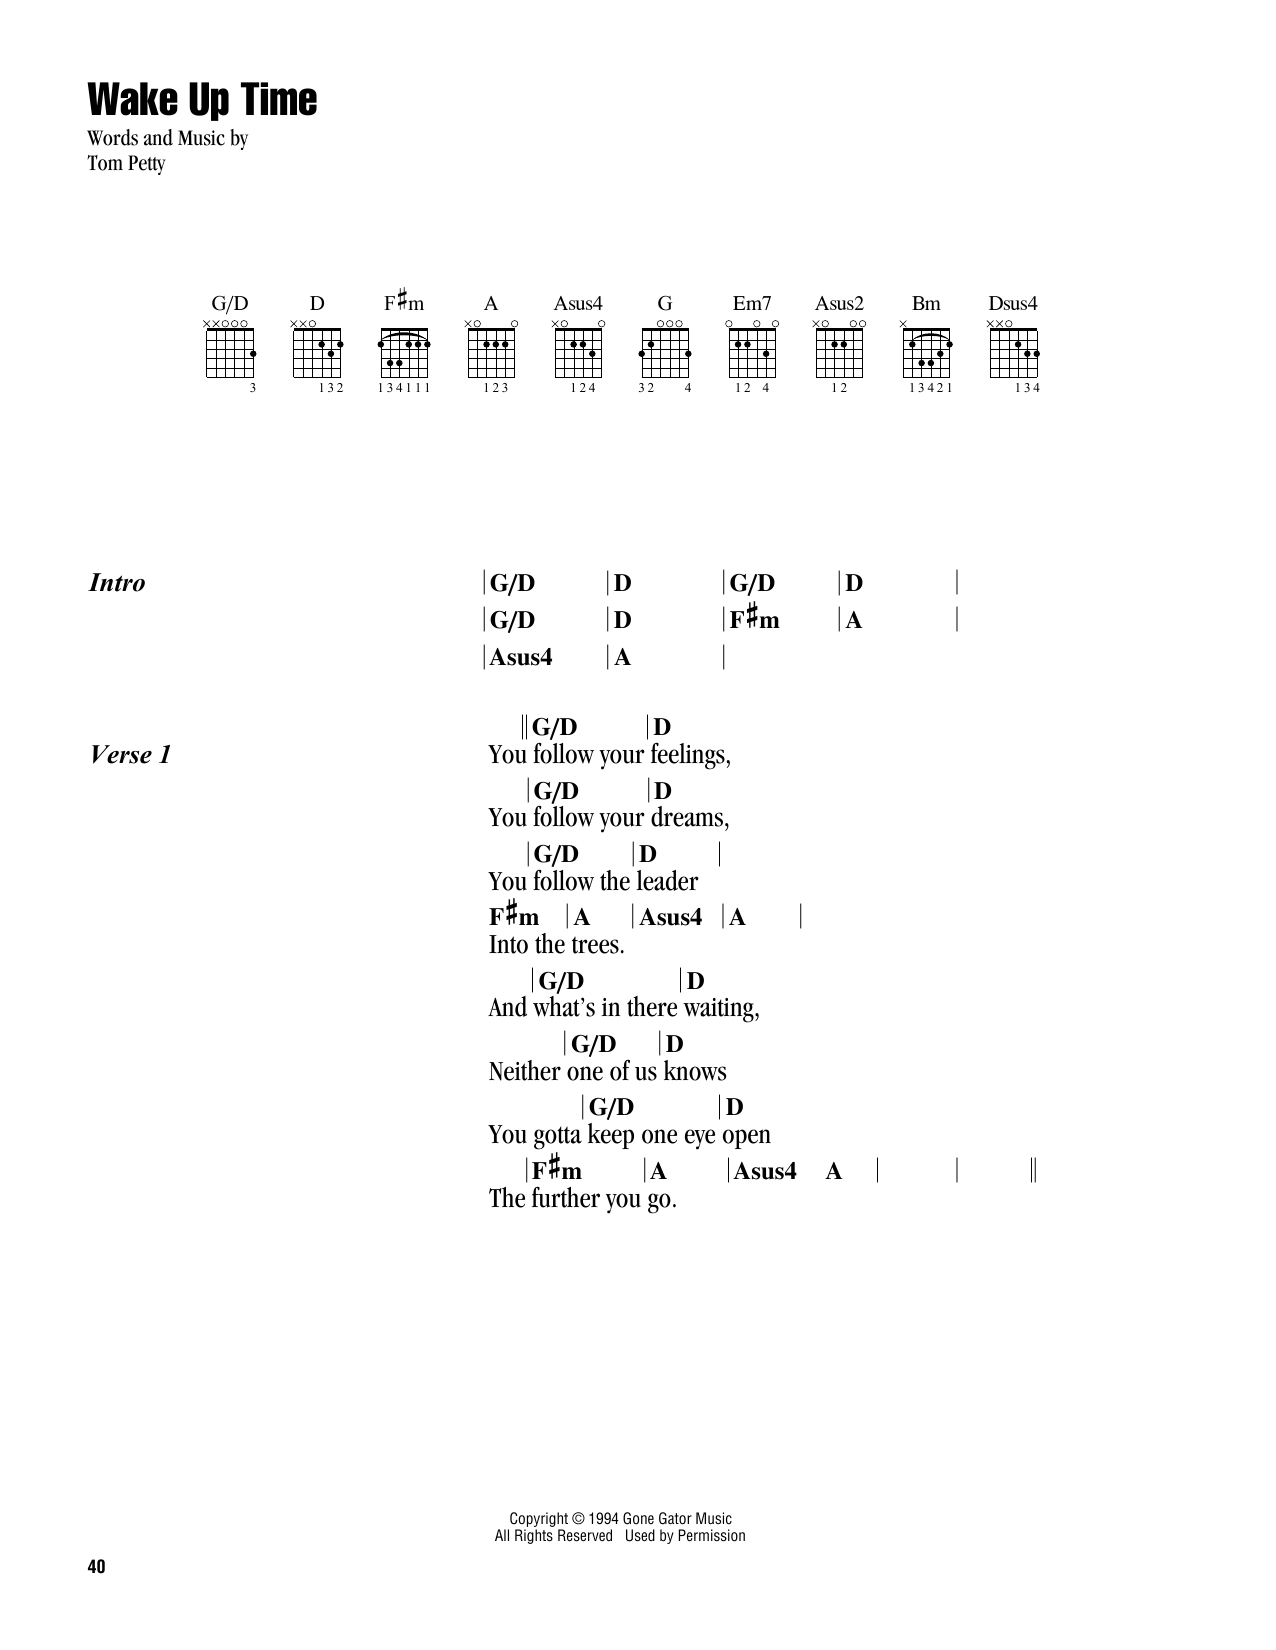 Tom Petty Wake Up Time Sheet Music Notes & Chords for Guitar Chords/Lyrics - Download or Print PDF